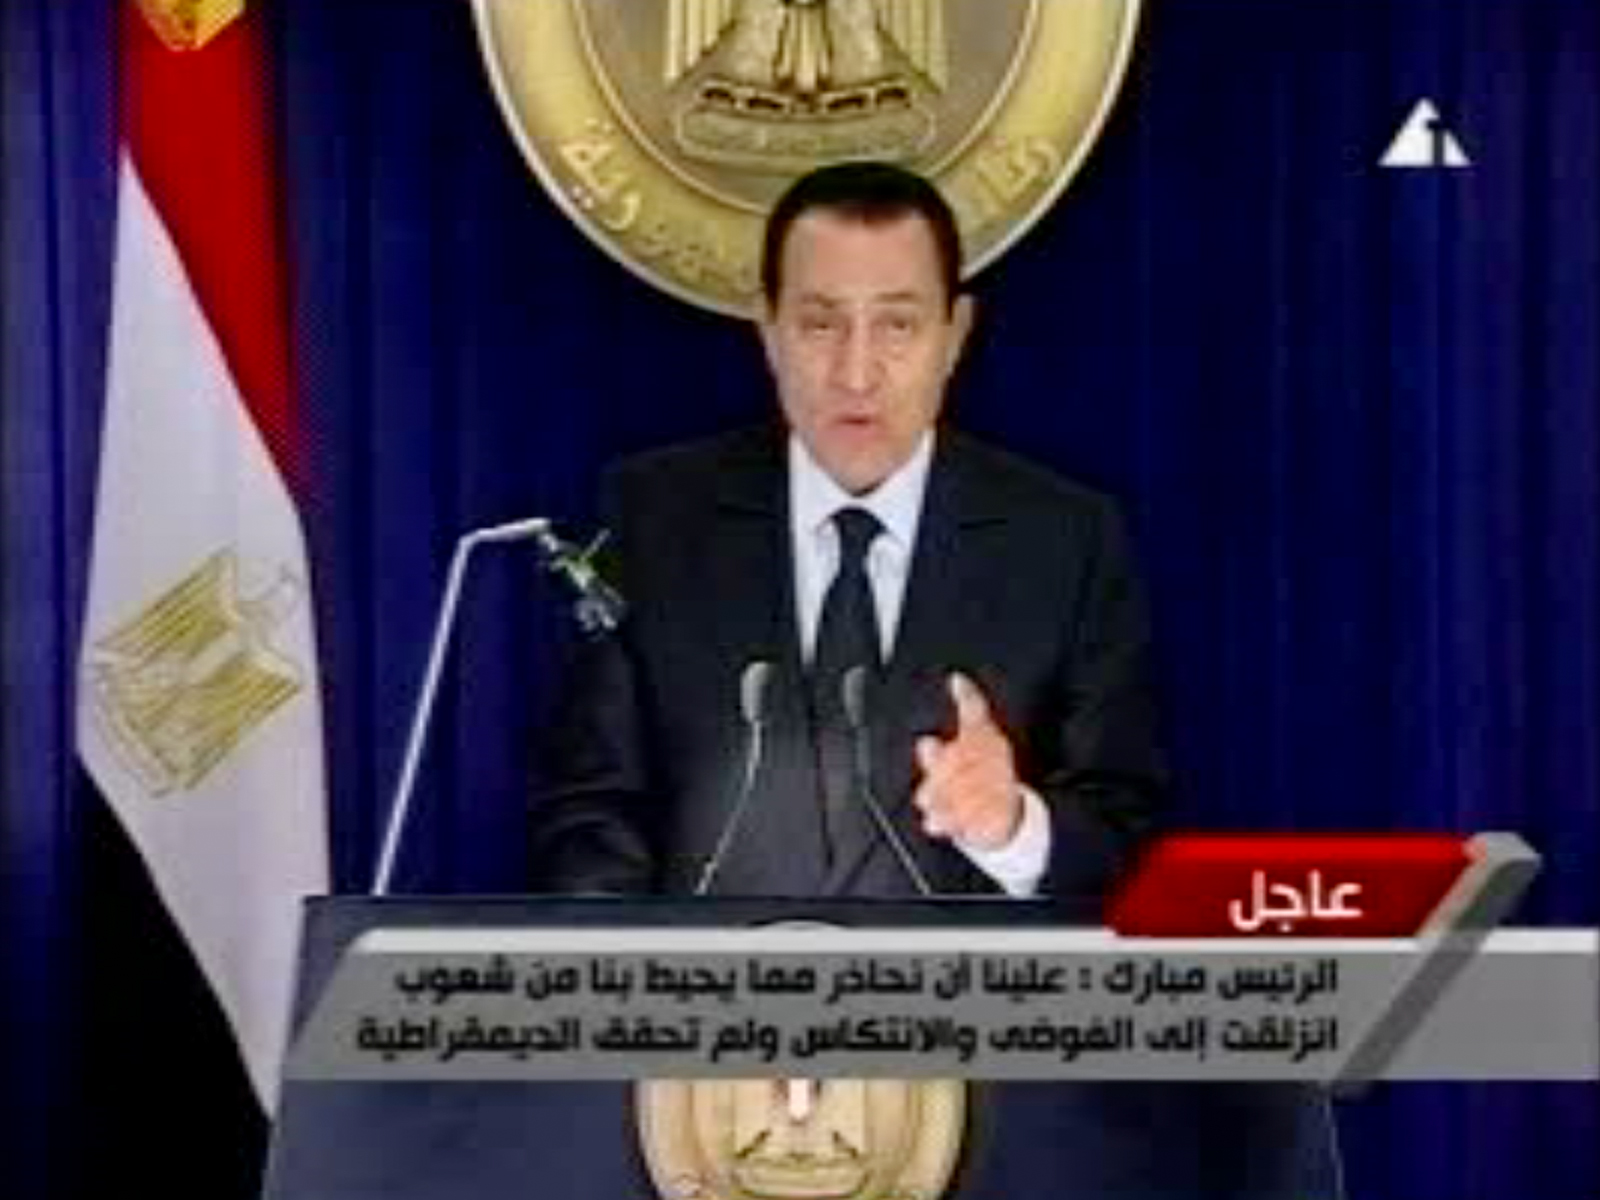 Kravaller, Al Jazeera, Revolution, Sociala Medier, Hosni Mubarak, Internet, Egypten, Demonstration, Bloggare